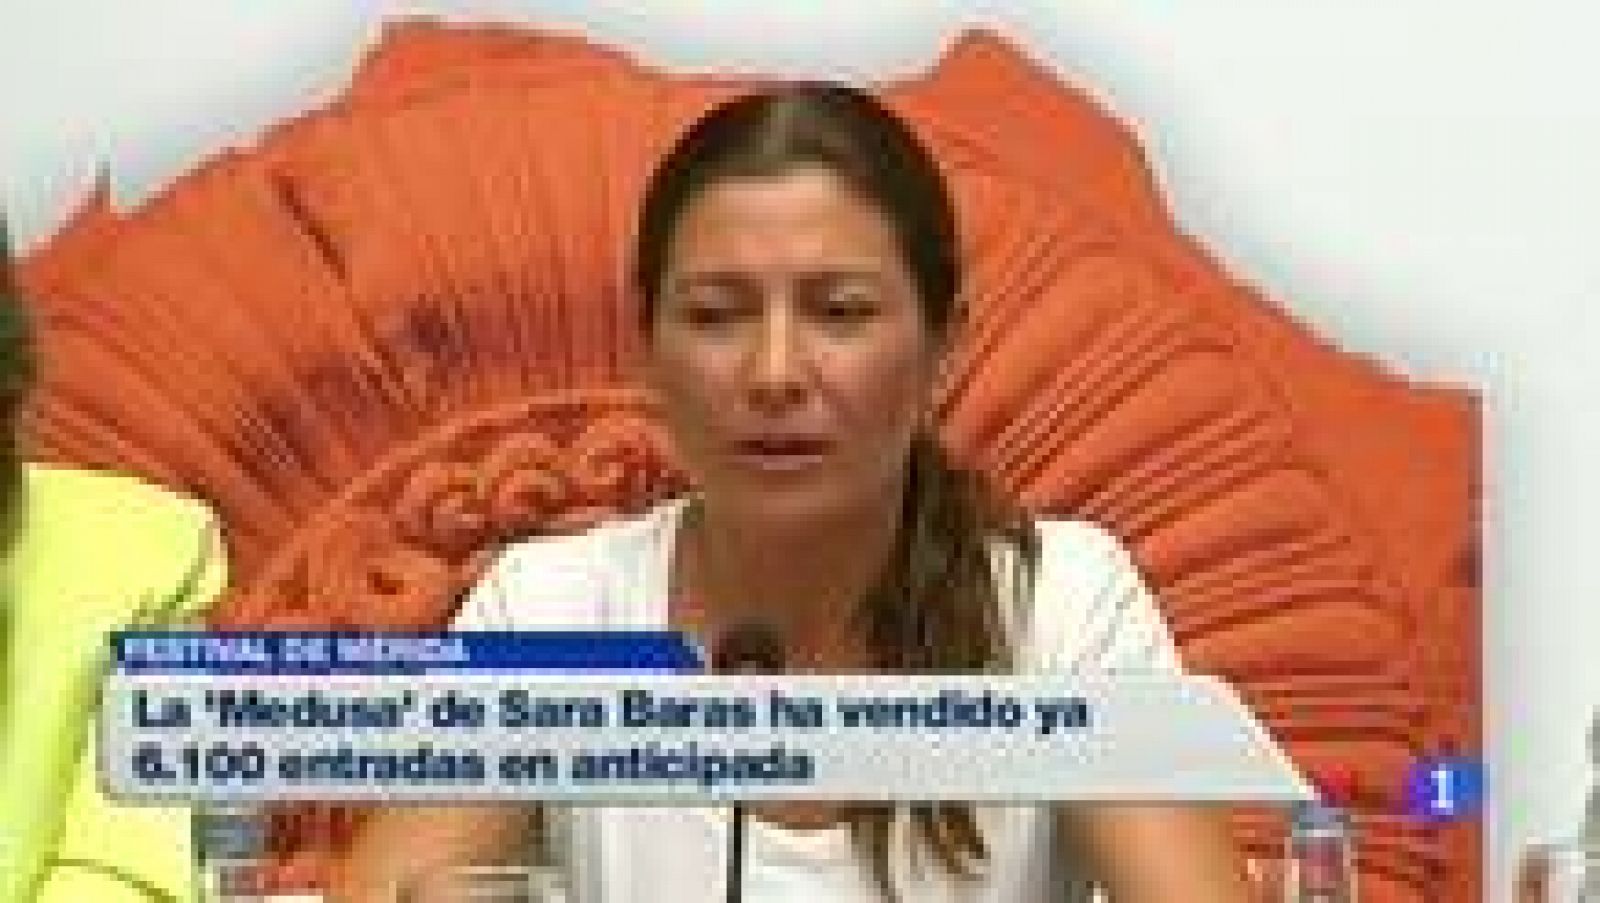 Noticias de Extremadura: Noticias de Extremadura - 08/07/14 | RTVE Play